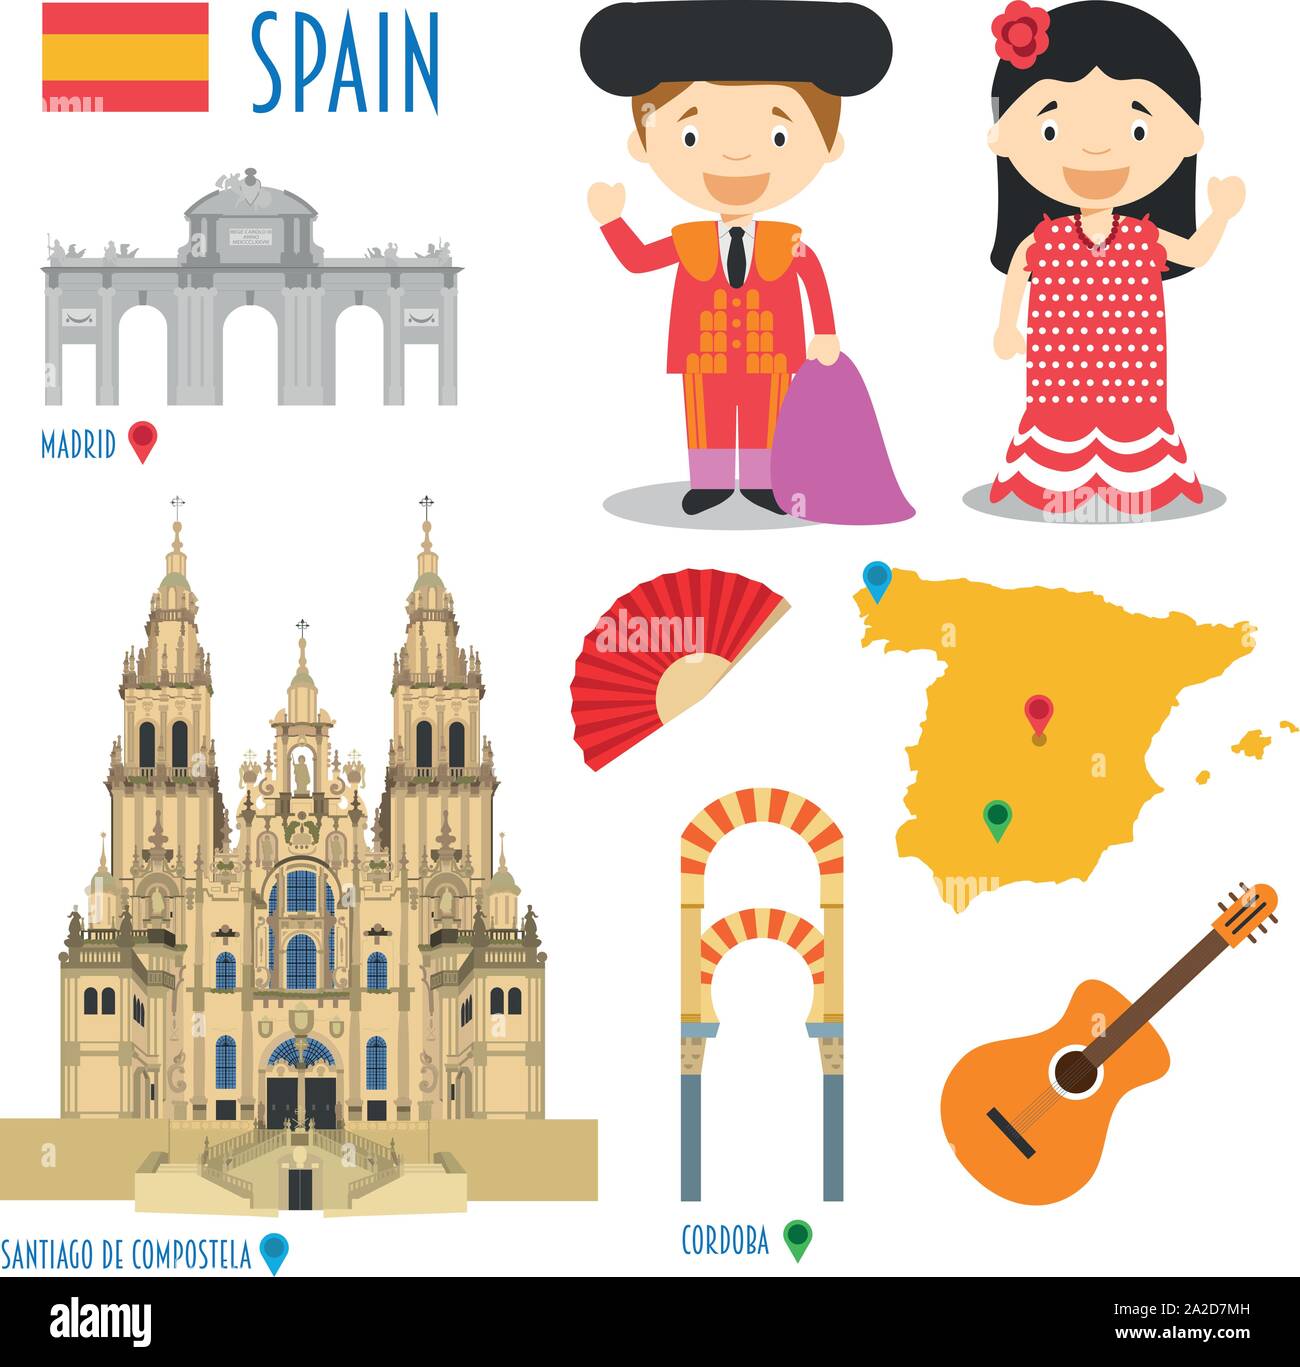 Spanien Icon Set Reise- und Tourismus-Konzept. Vector Illustration Stock Vektor